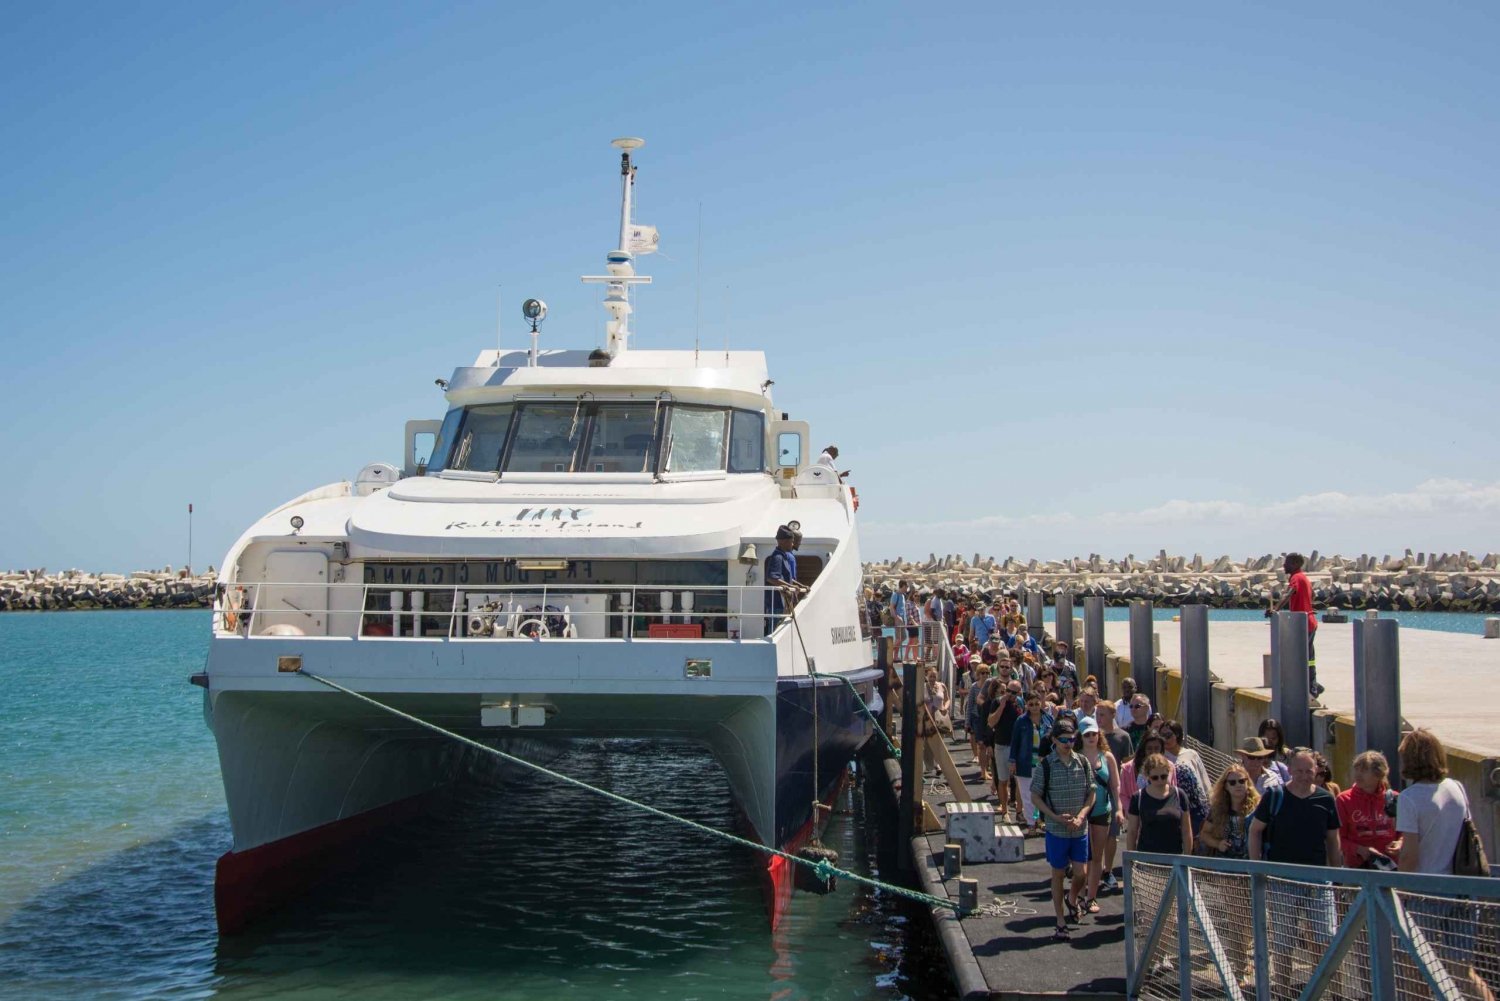 Kapkaupunki: Robben Island Boat Trip & Museum Tour Ticket